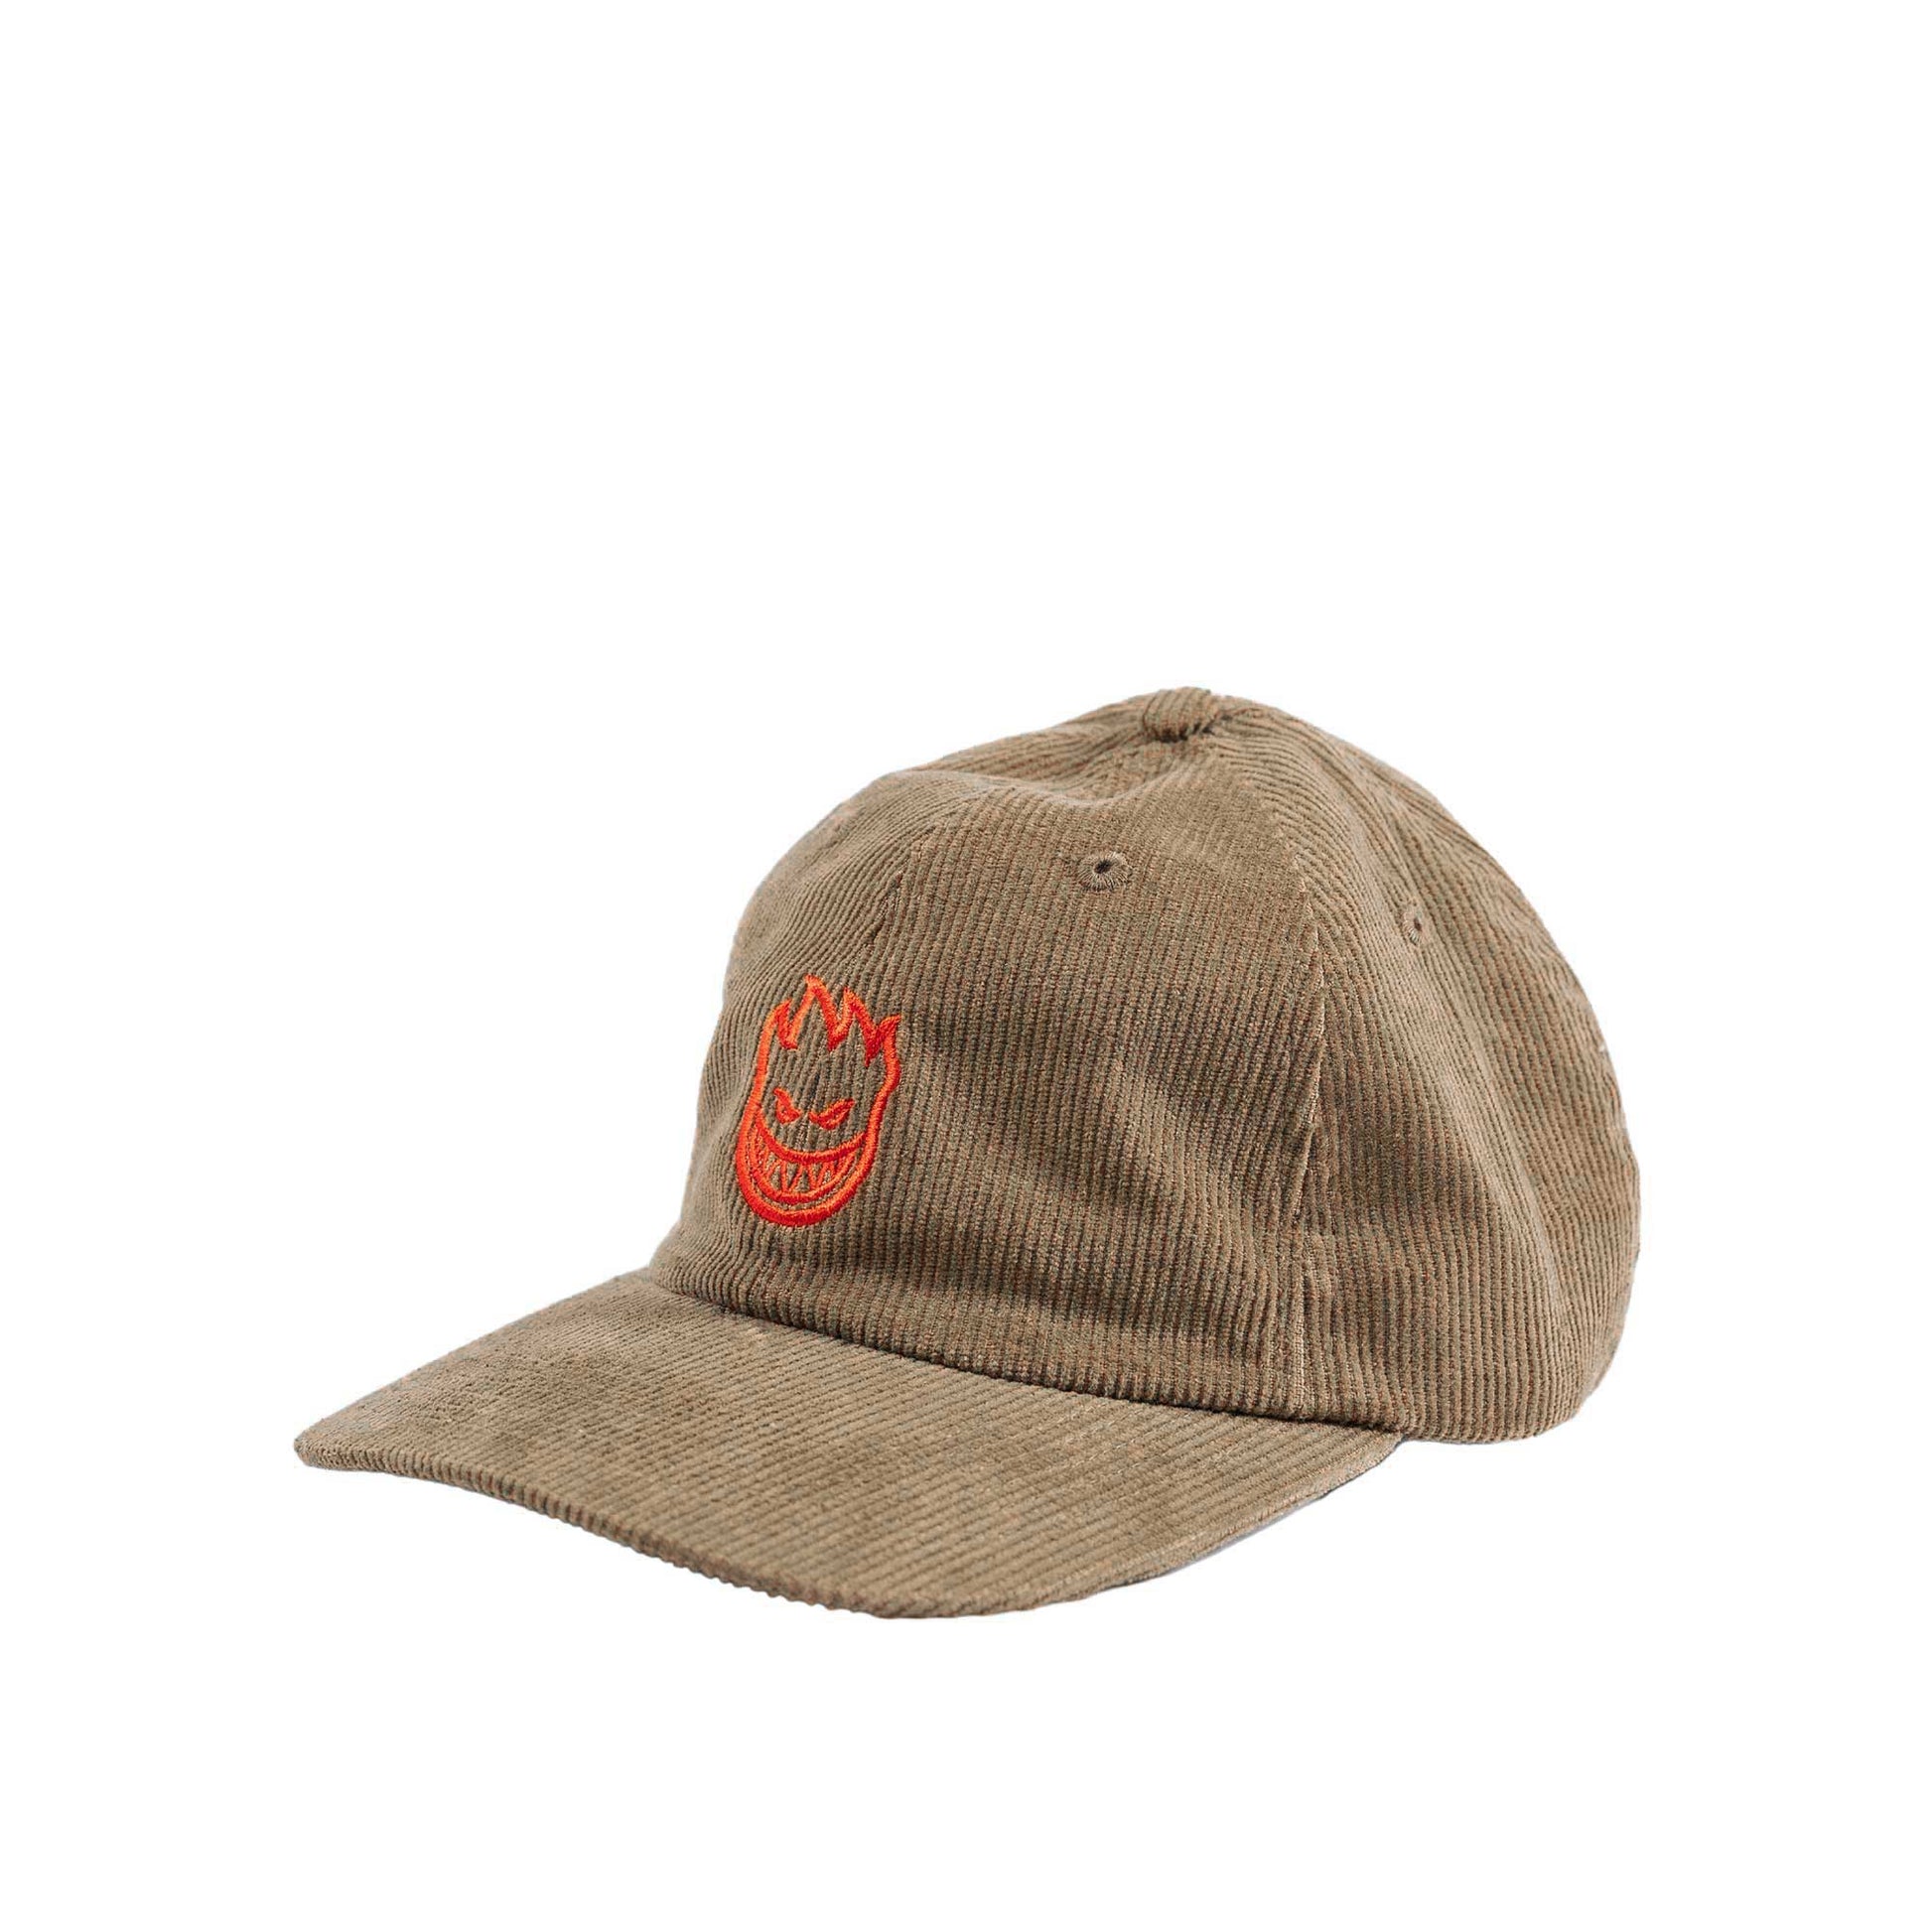 Spitfire Lil Bighead Strapback Hat, brown/red - Tiki Room Skateboards - 1